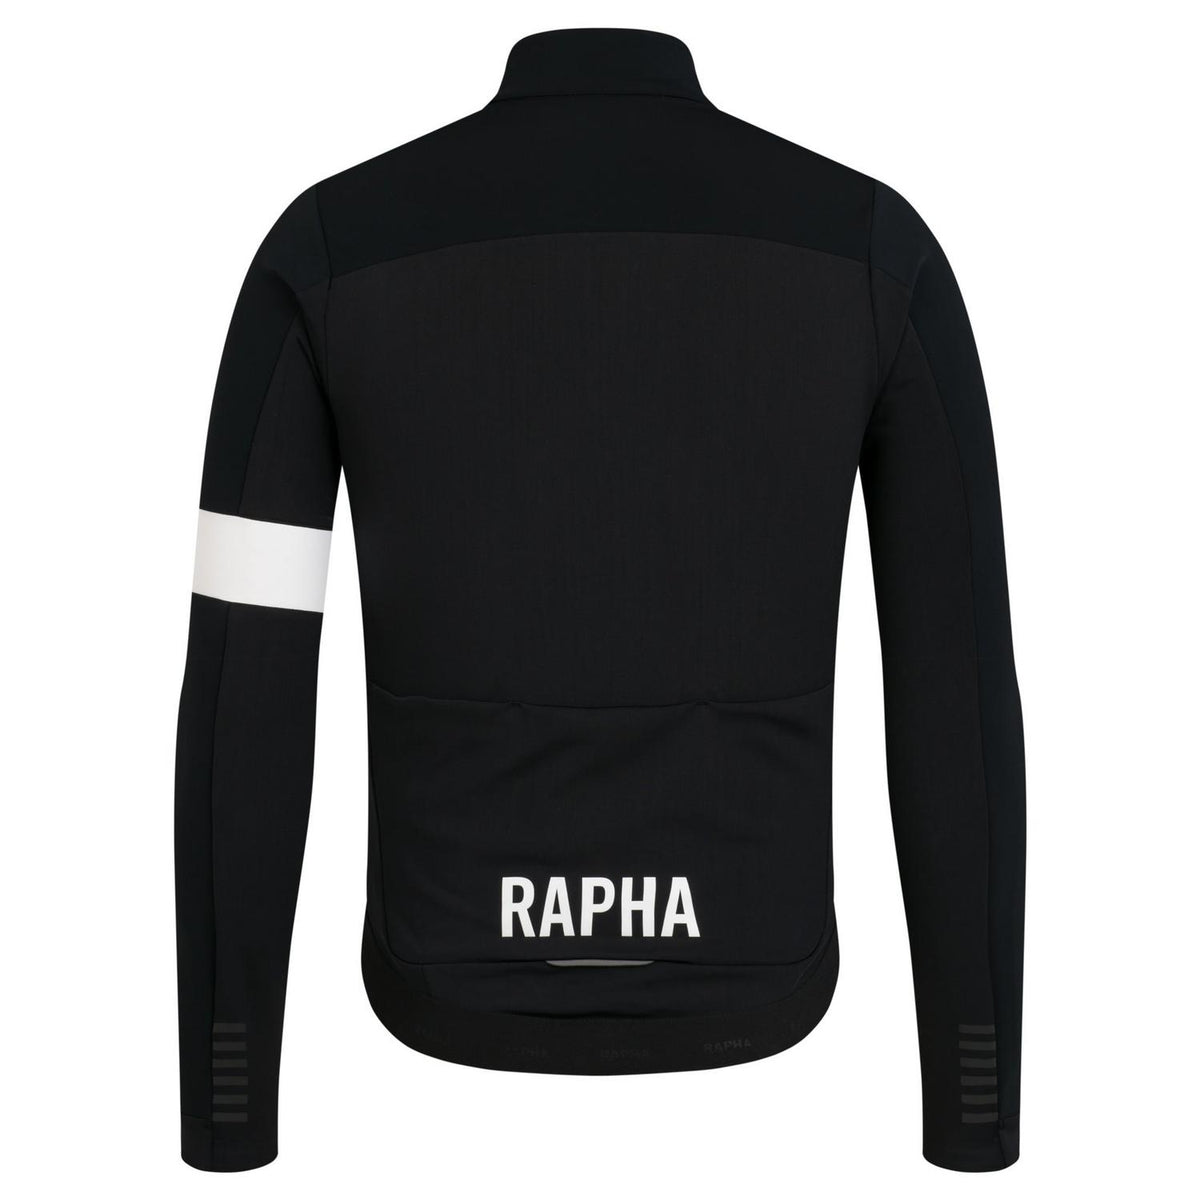 Rapha Men’s Pro Team Winter Jacket